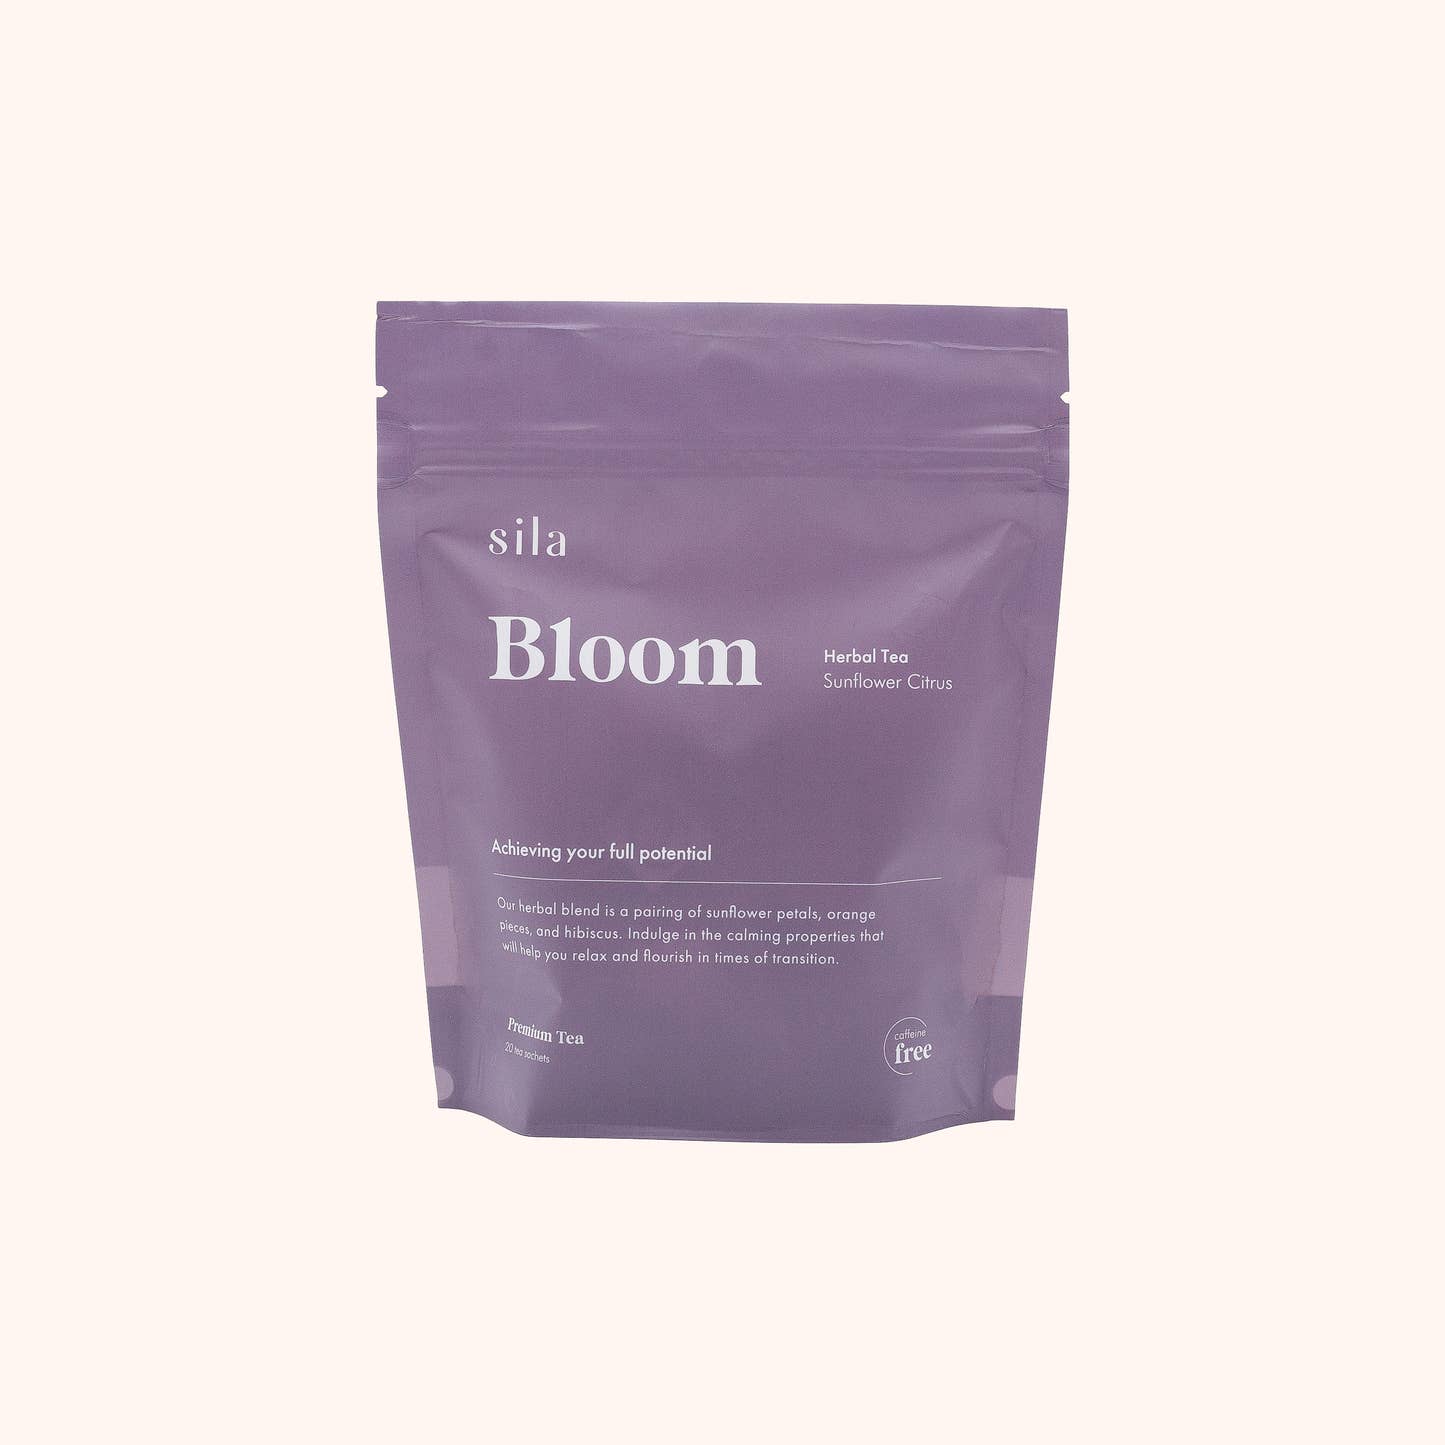 Bloom - Sunflower Citrus by Sila purple pouch